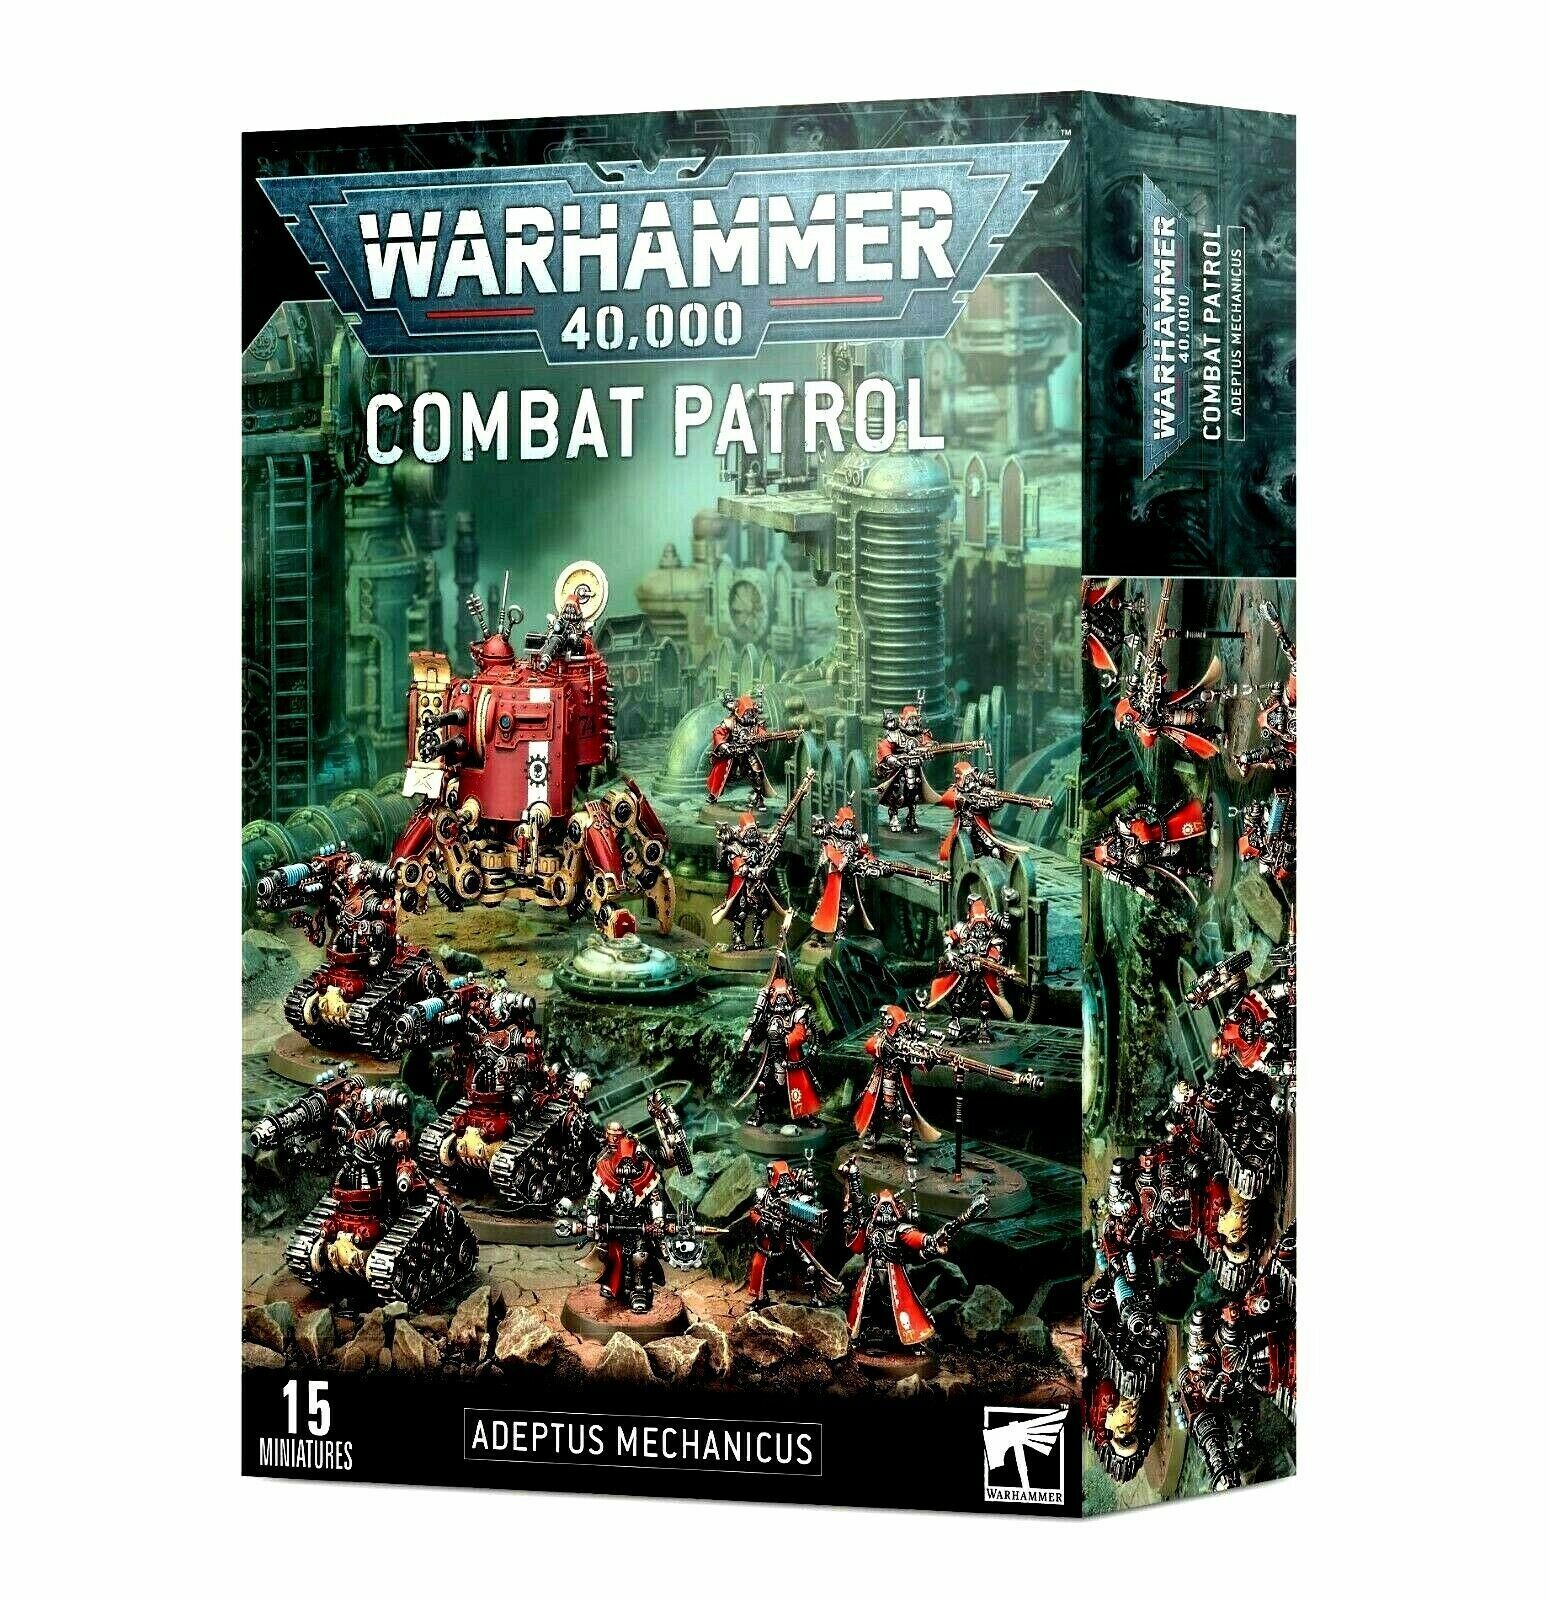 Combat Patrol: Adeptus Mechanicus - Warhammer 40k